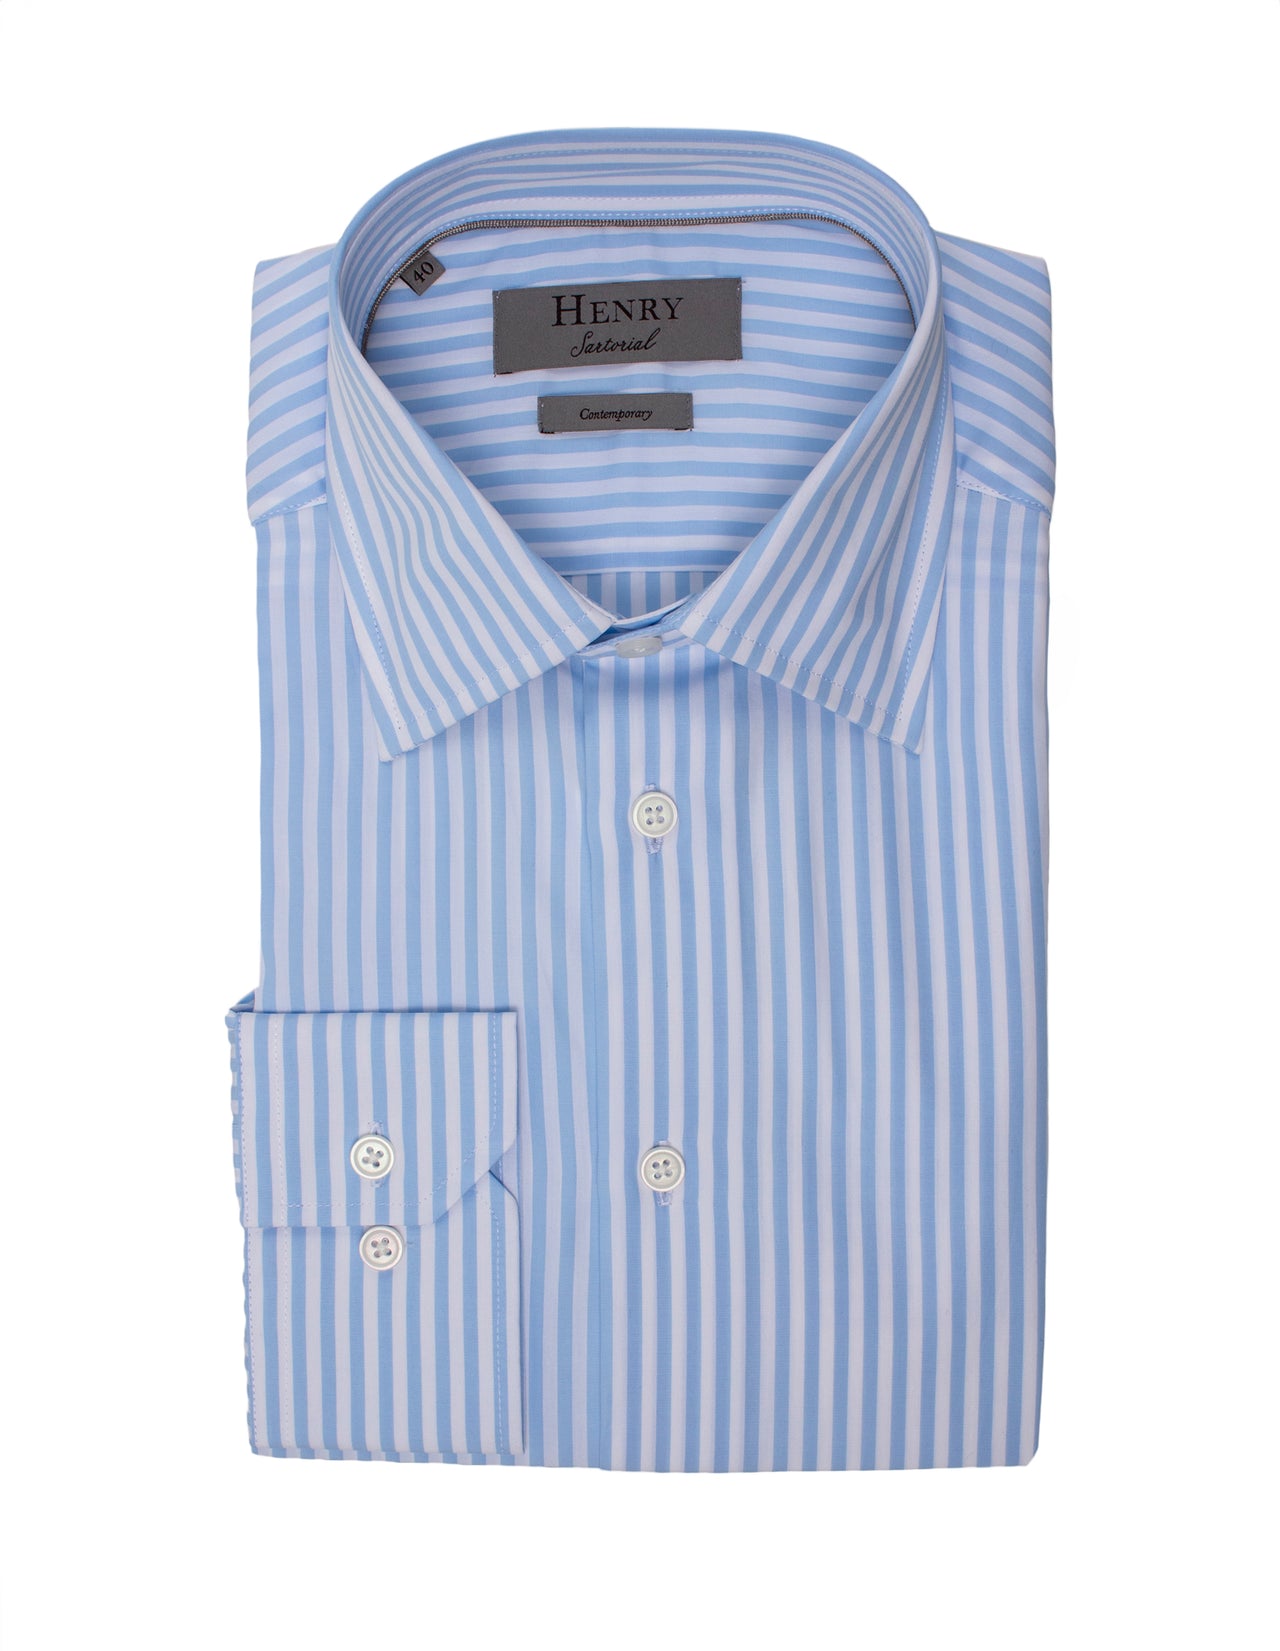 HENRY SARTORIAL Contemporary Fit Stripe Shirt BLUE/WHITE